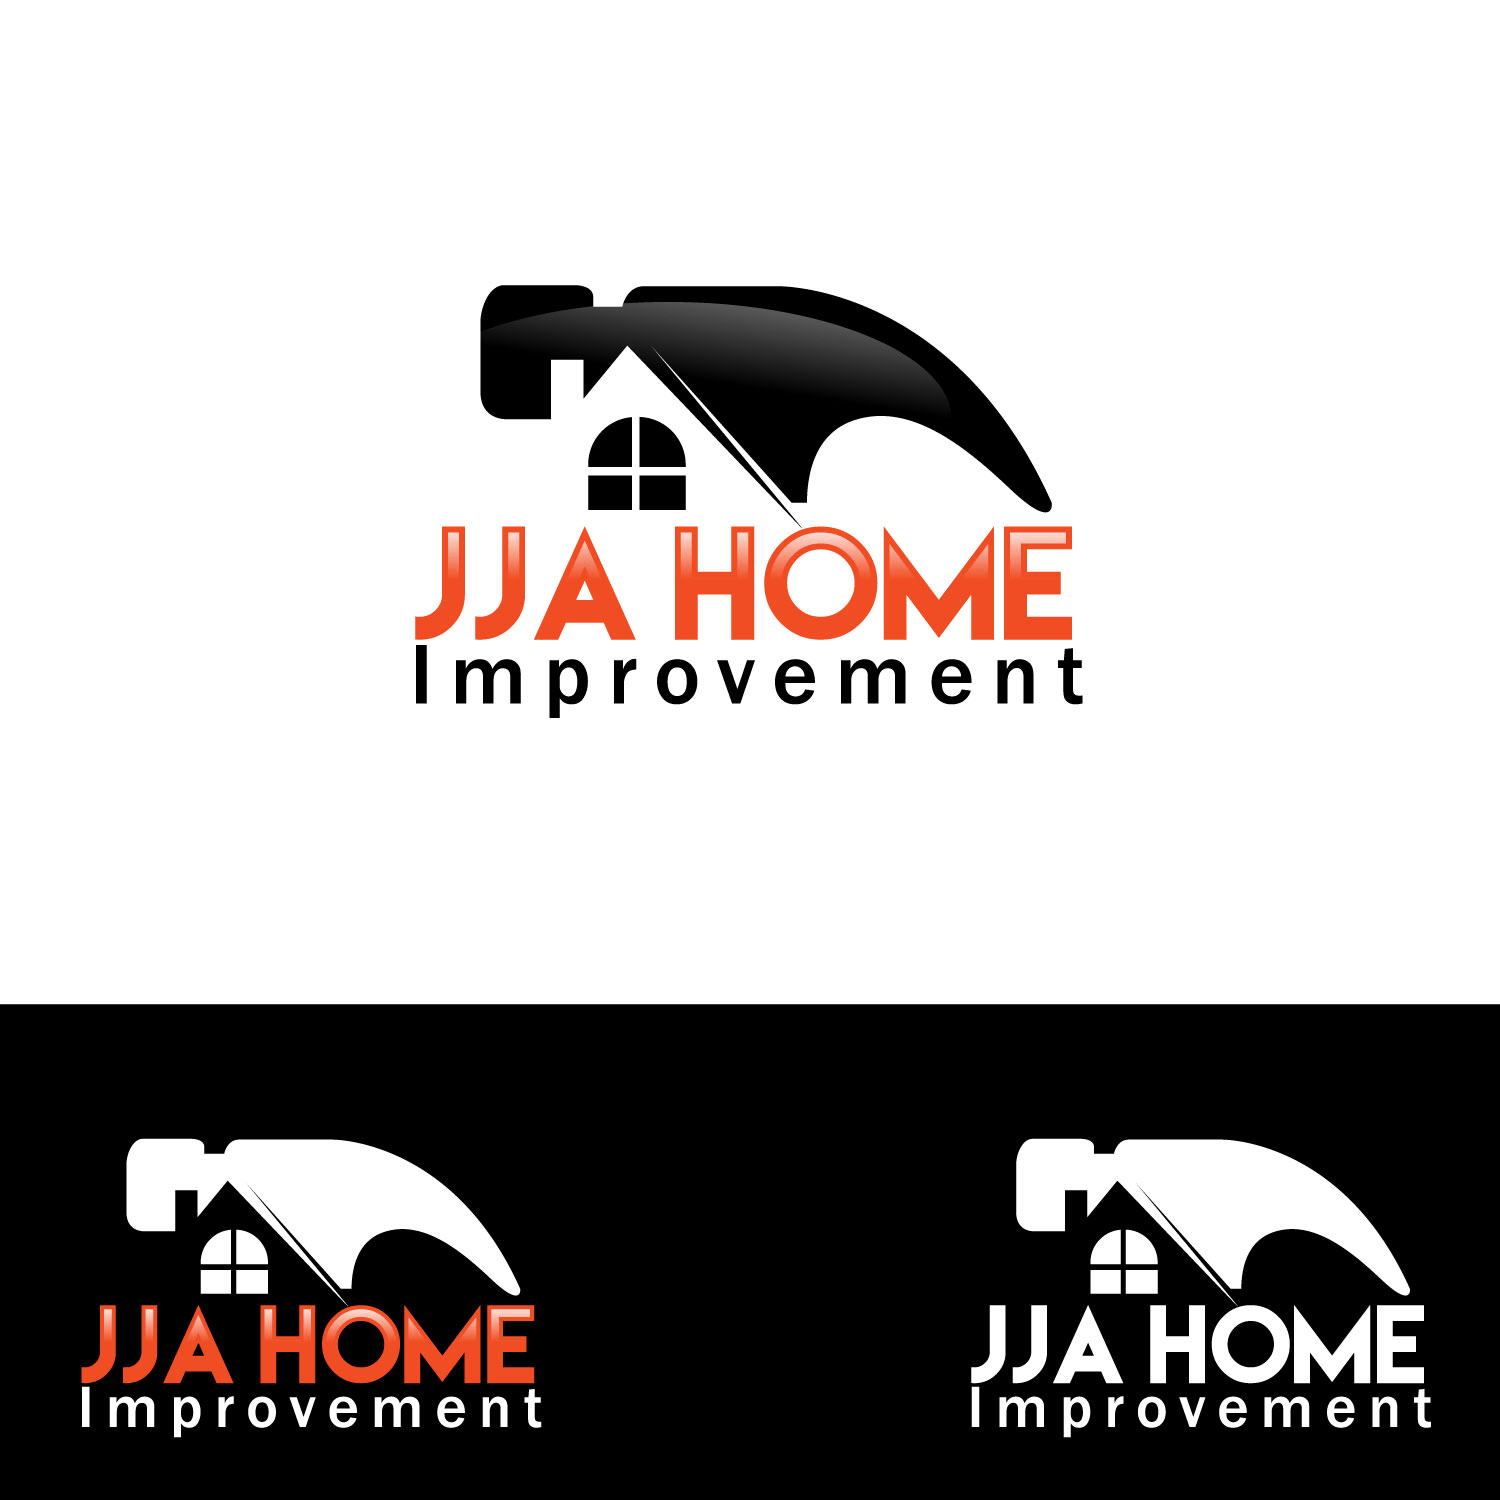 Home Improvement Logo - Logo Design Contests JJA Home Improvement Logo Design